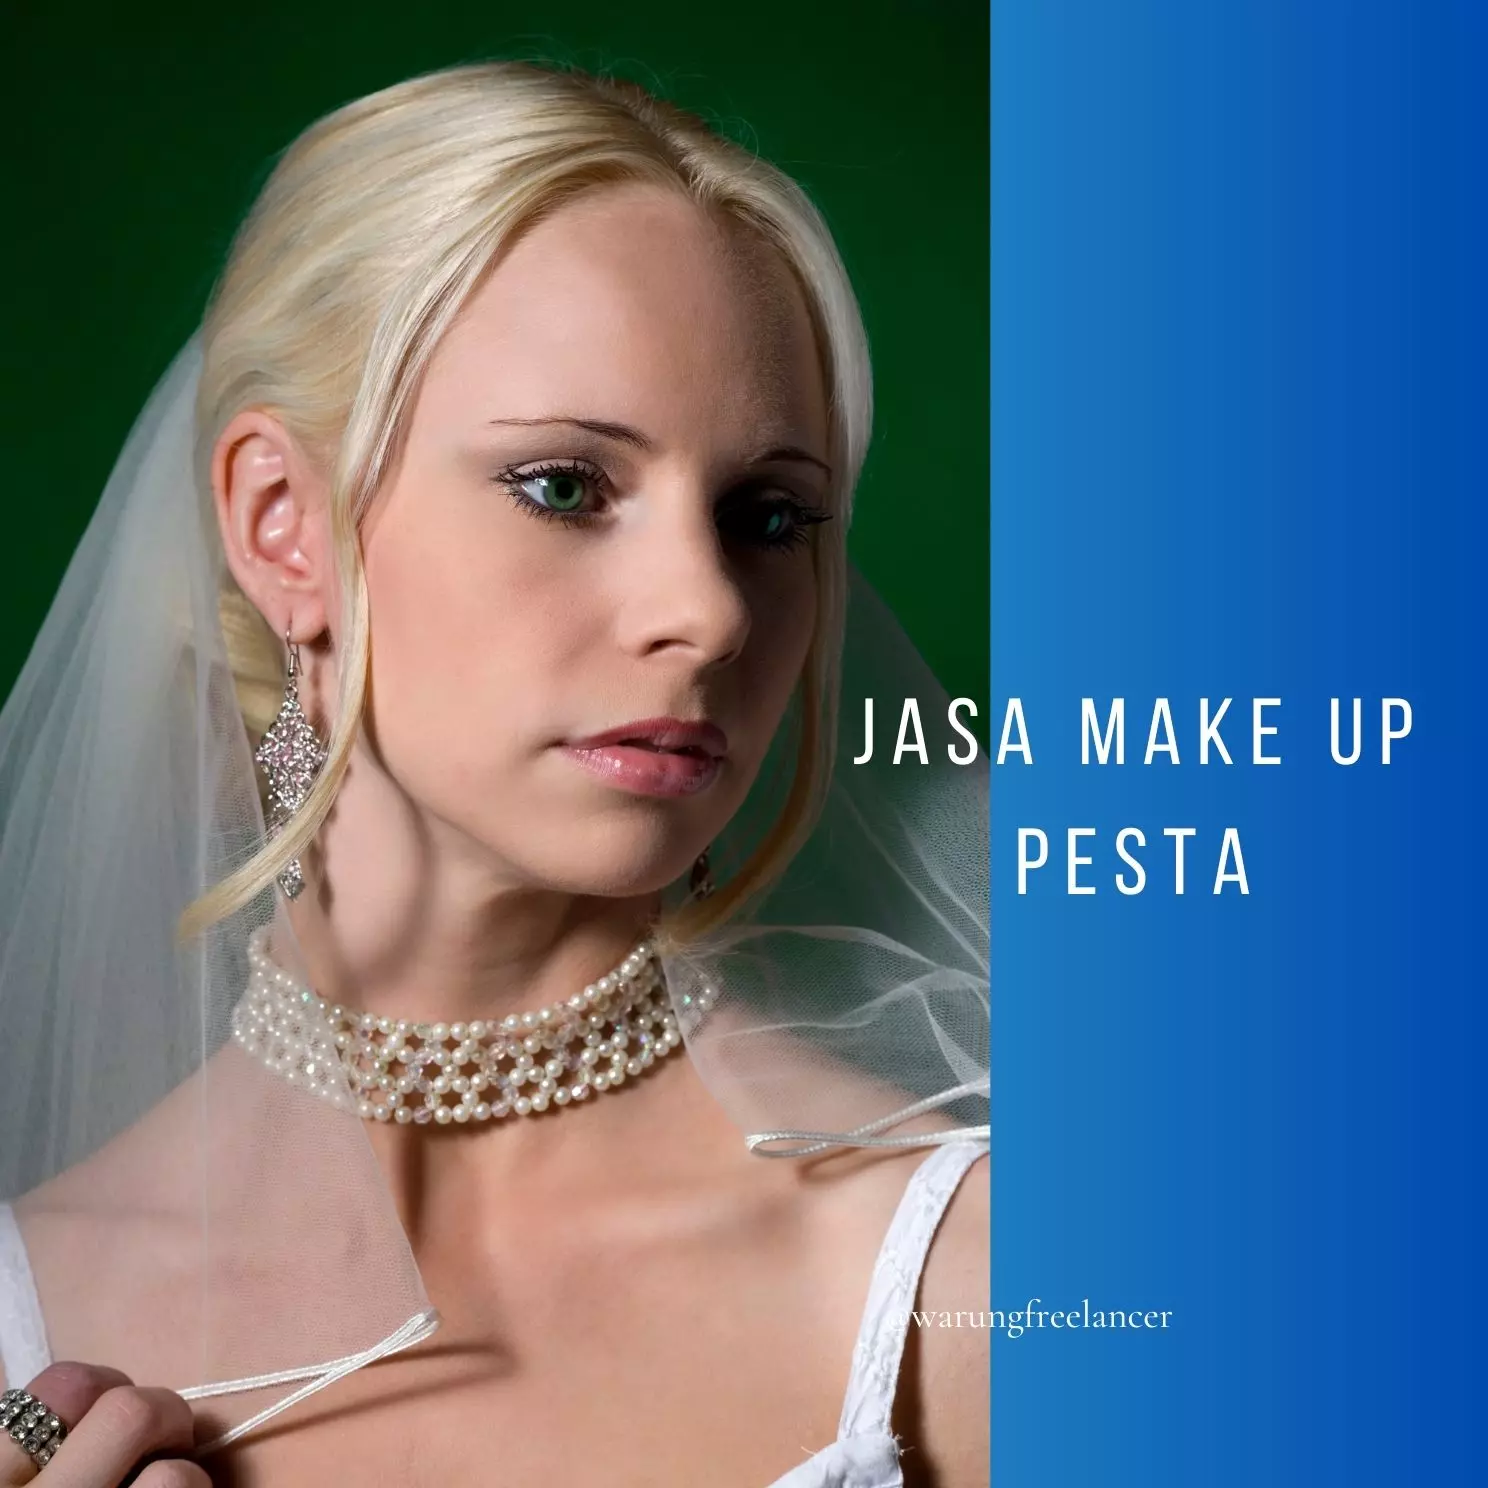 Jasa Make Up Pesta